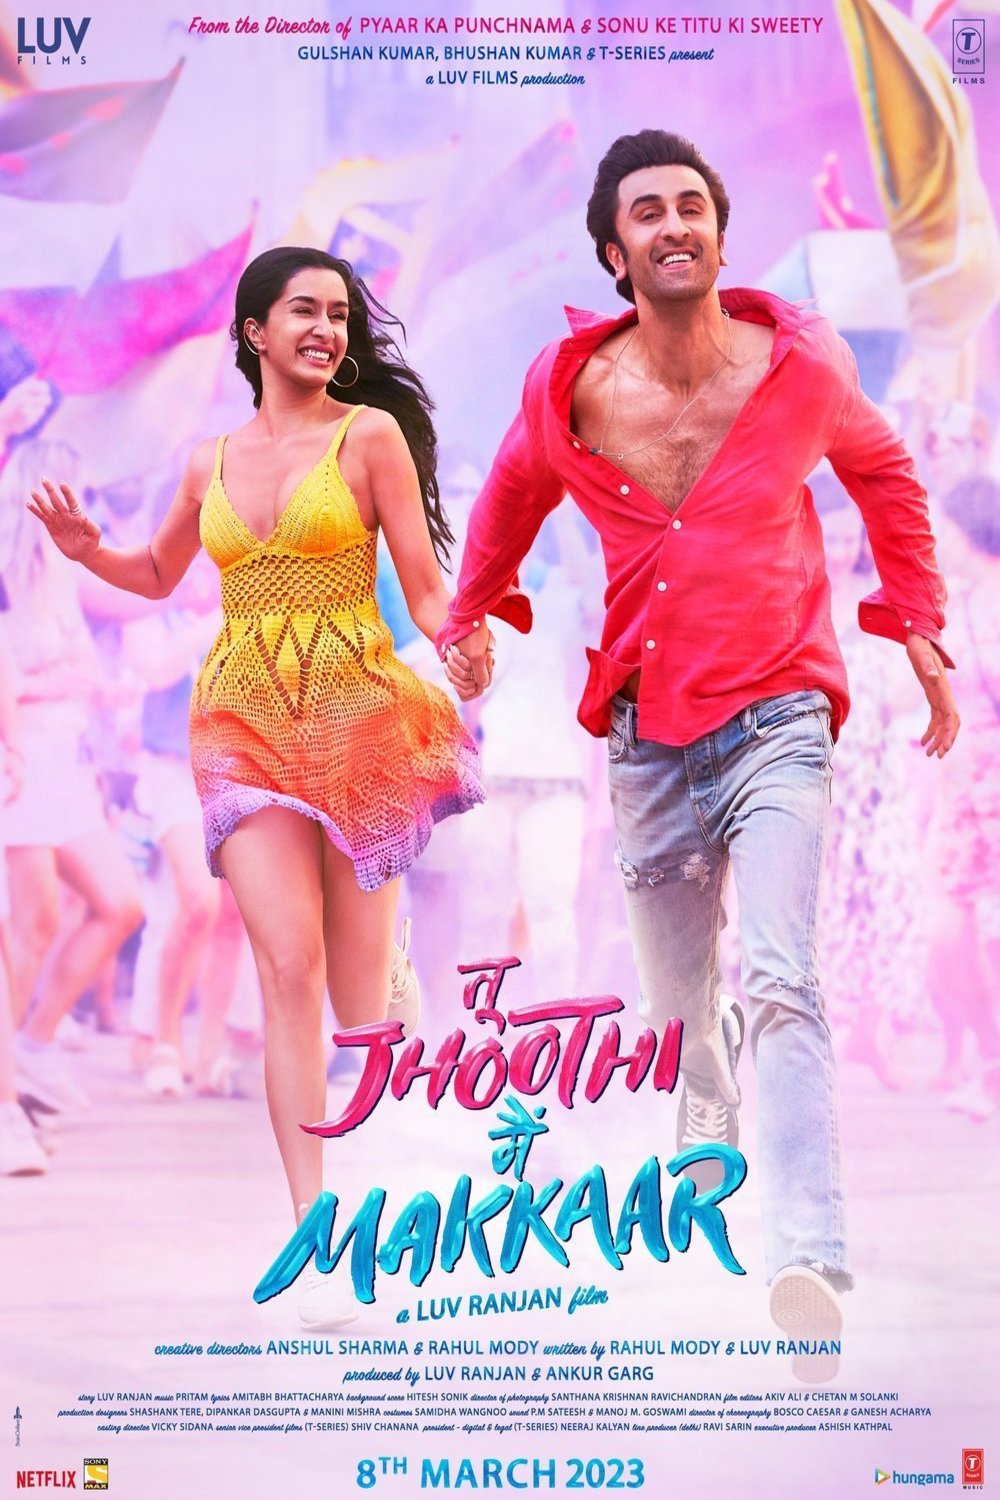 Hindi poster of the movie Tu Jhoothi Main Makkaar